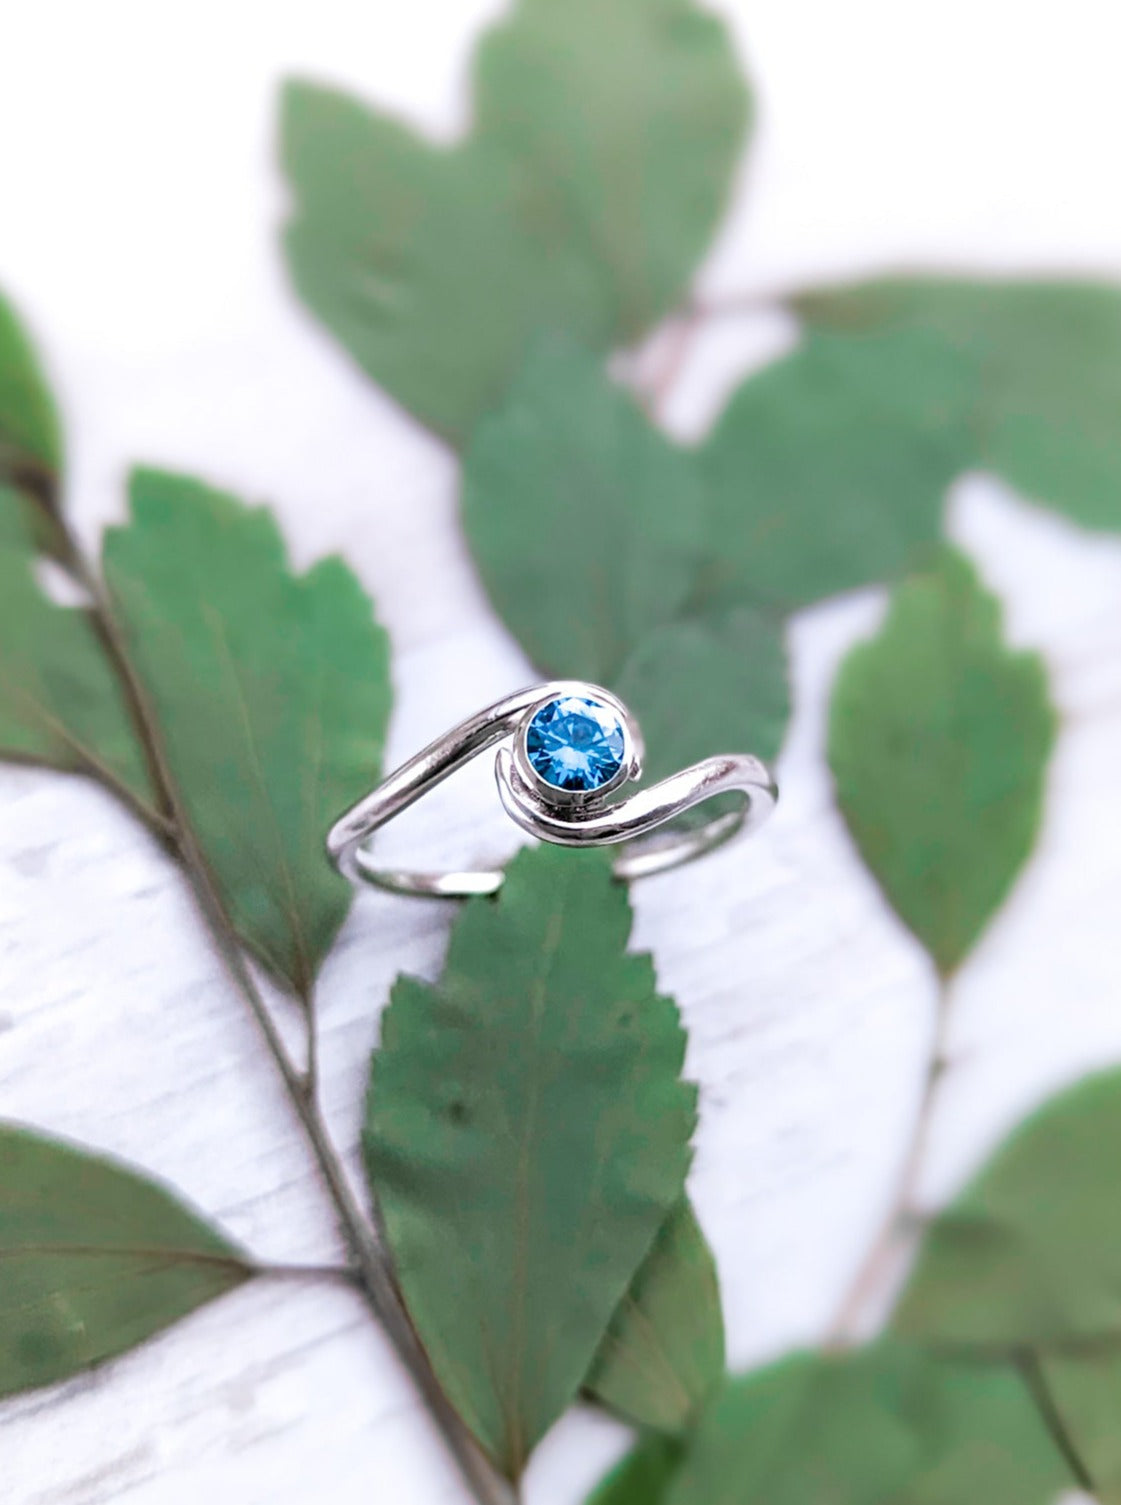 Vibrant blue solitaire engagement ring